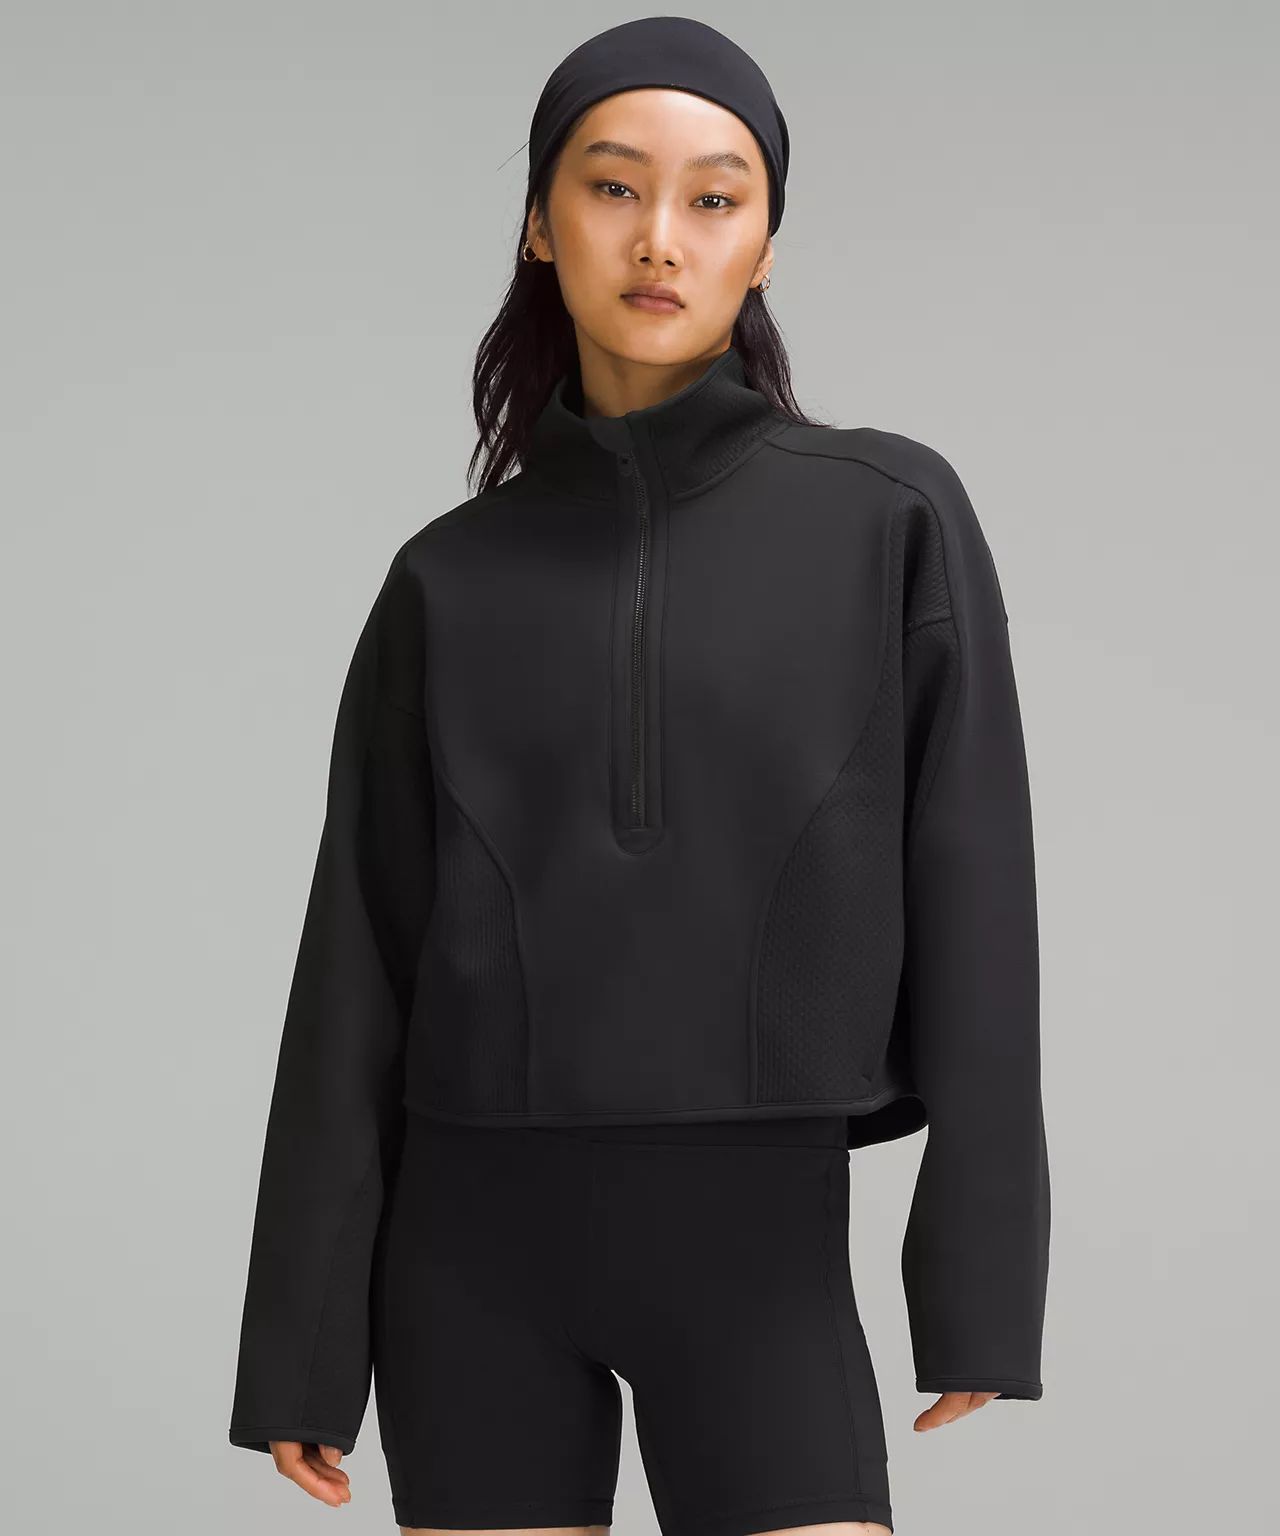 Mixed Fabric Half-Zip Pullover | Women's Hoodies & Sweatshirts | lululemon | Lululemon (US)